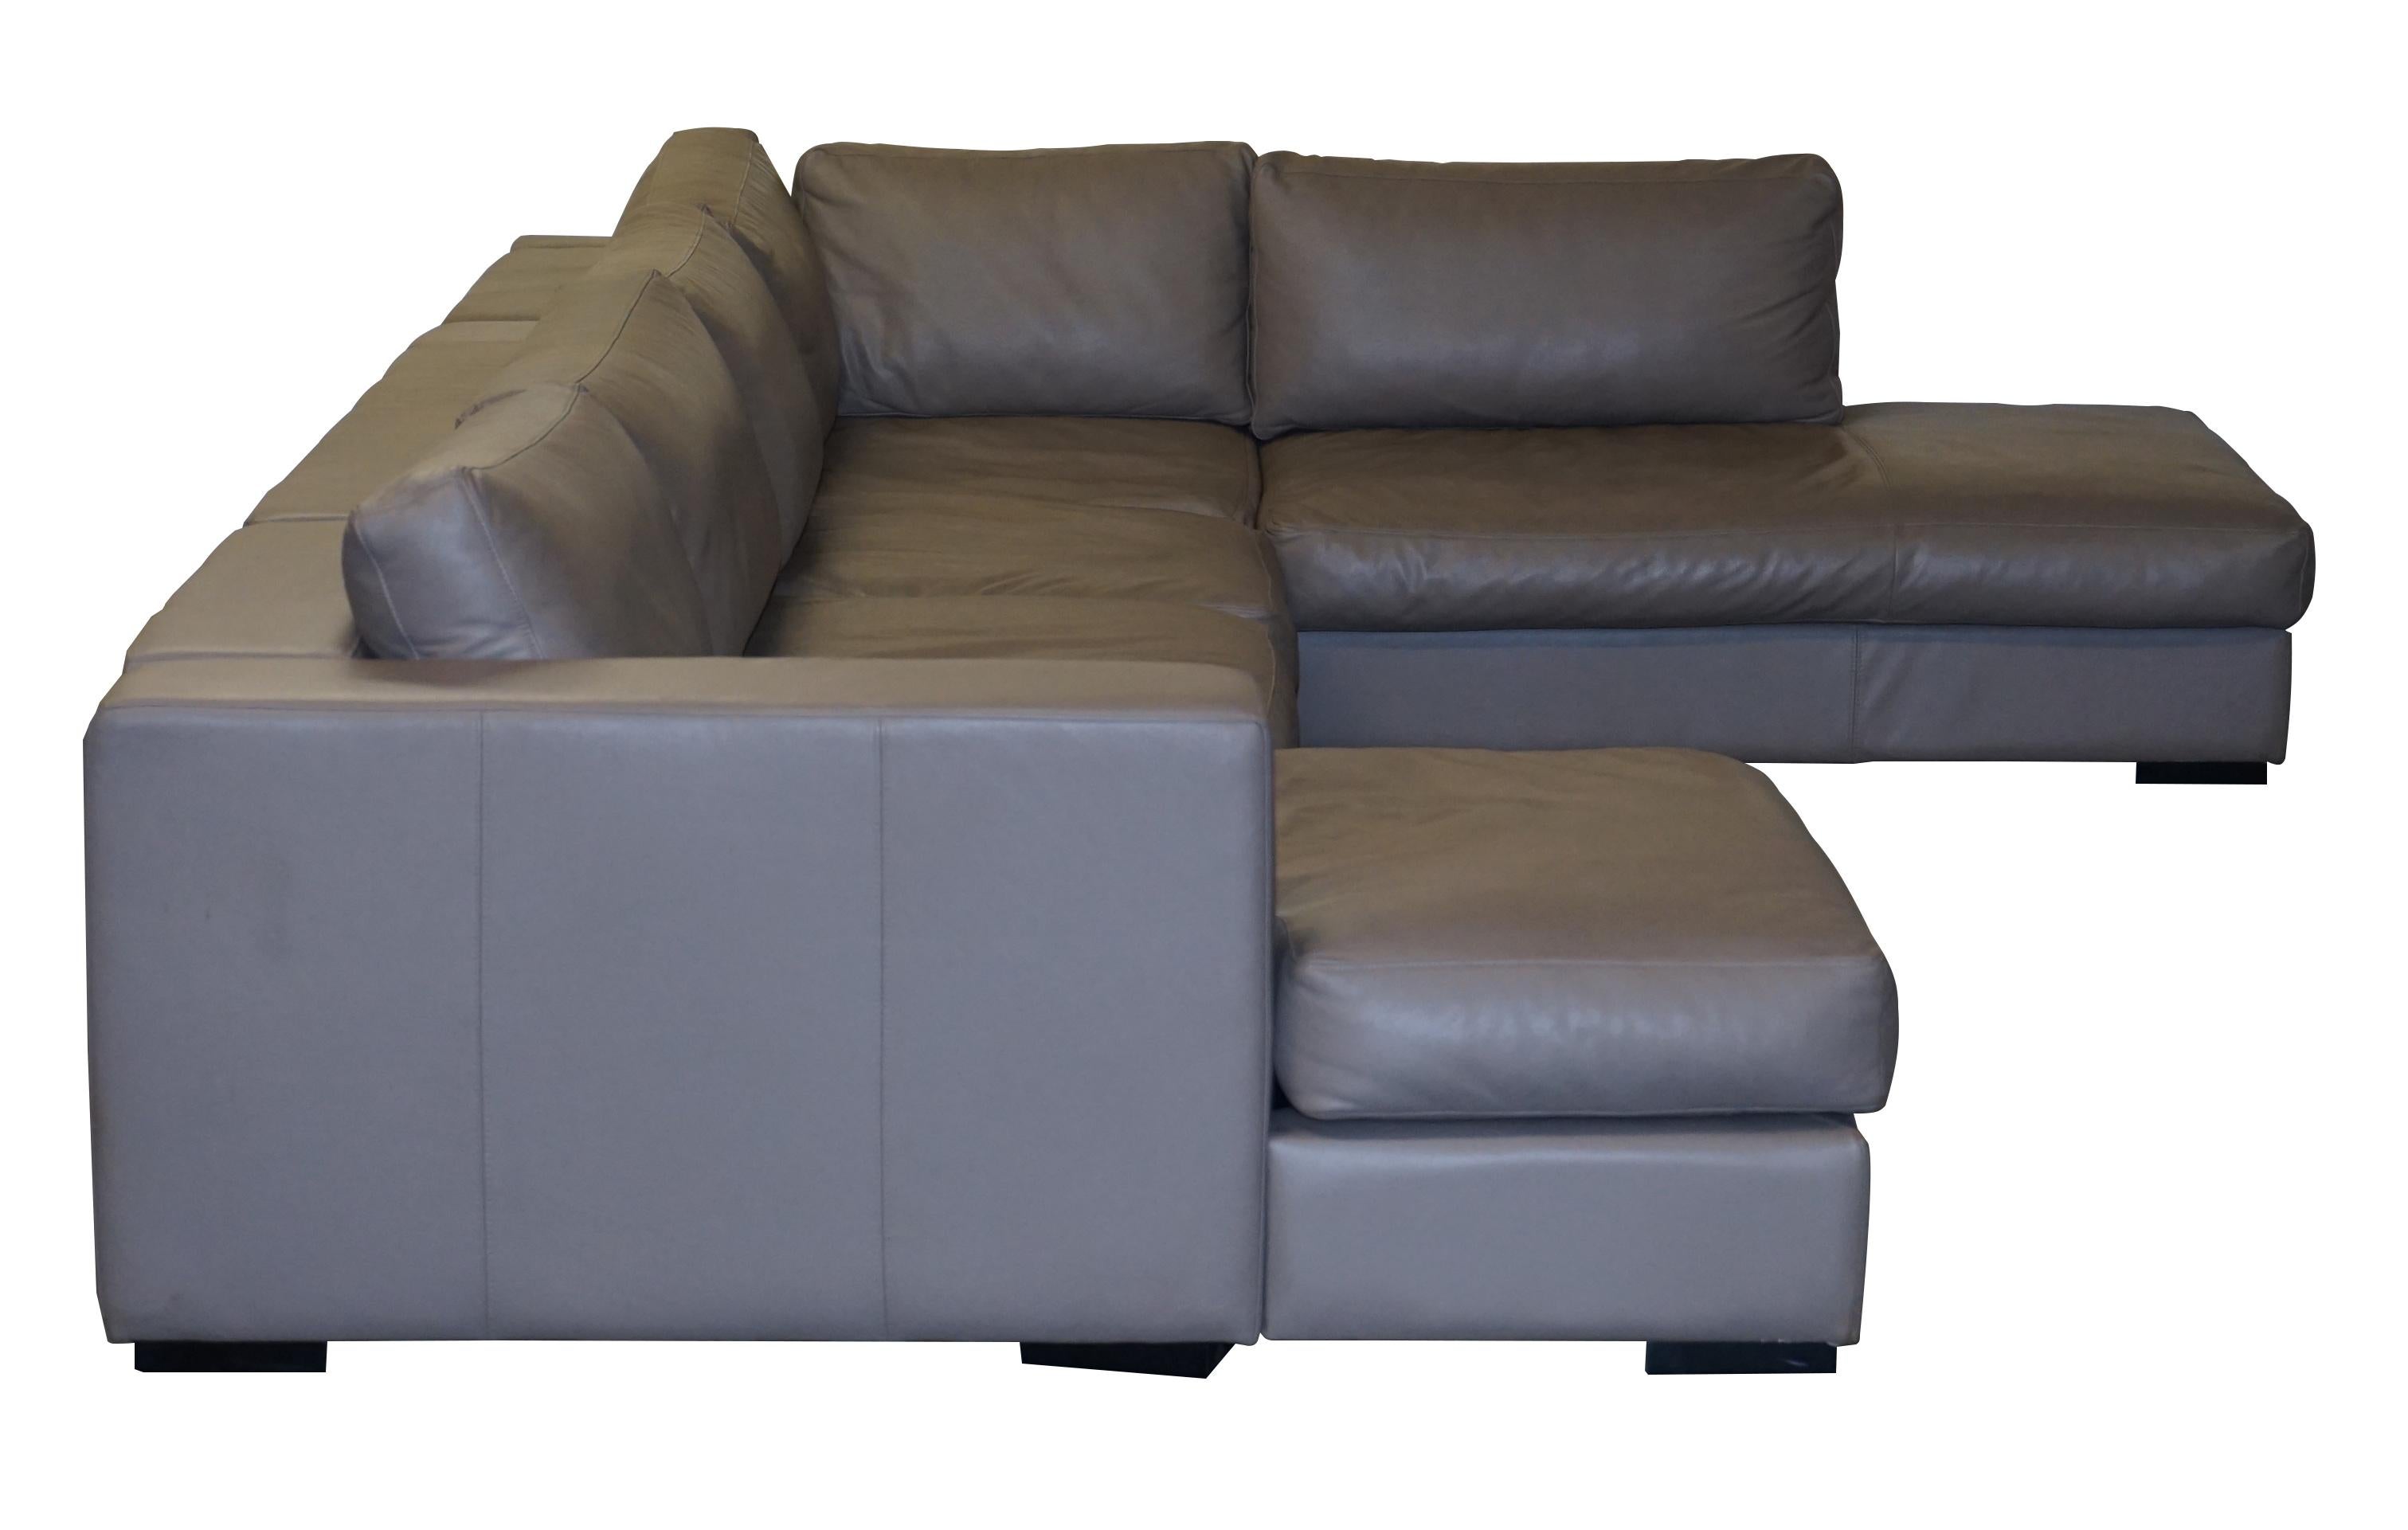 Sublime Bo Concepts Cenova Grey Leather Corner Sofa Chaise Seats 5-6 For Sale 7